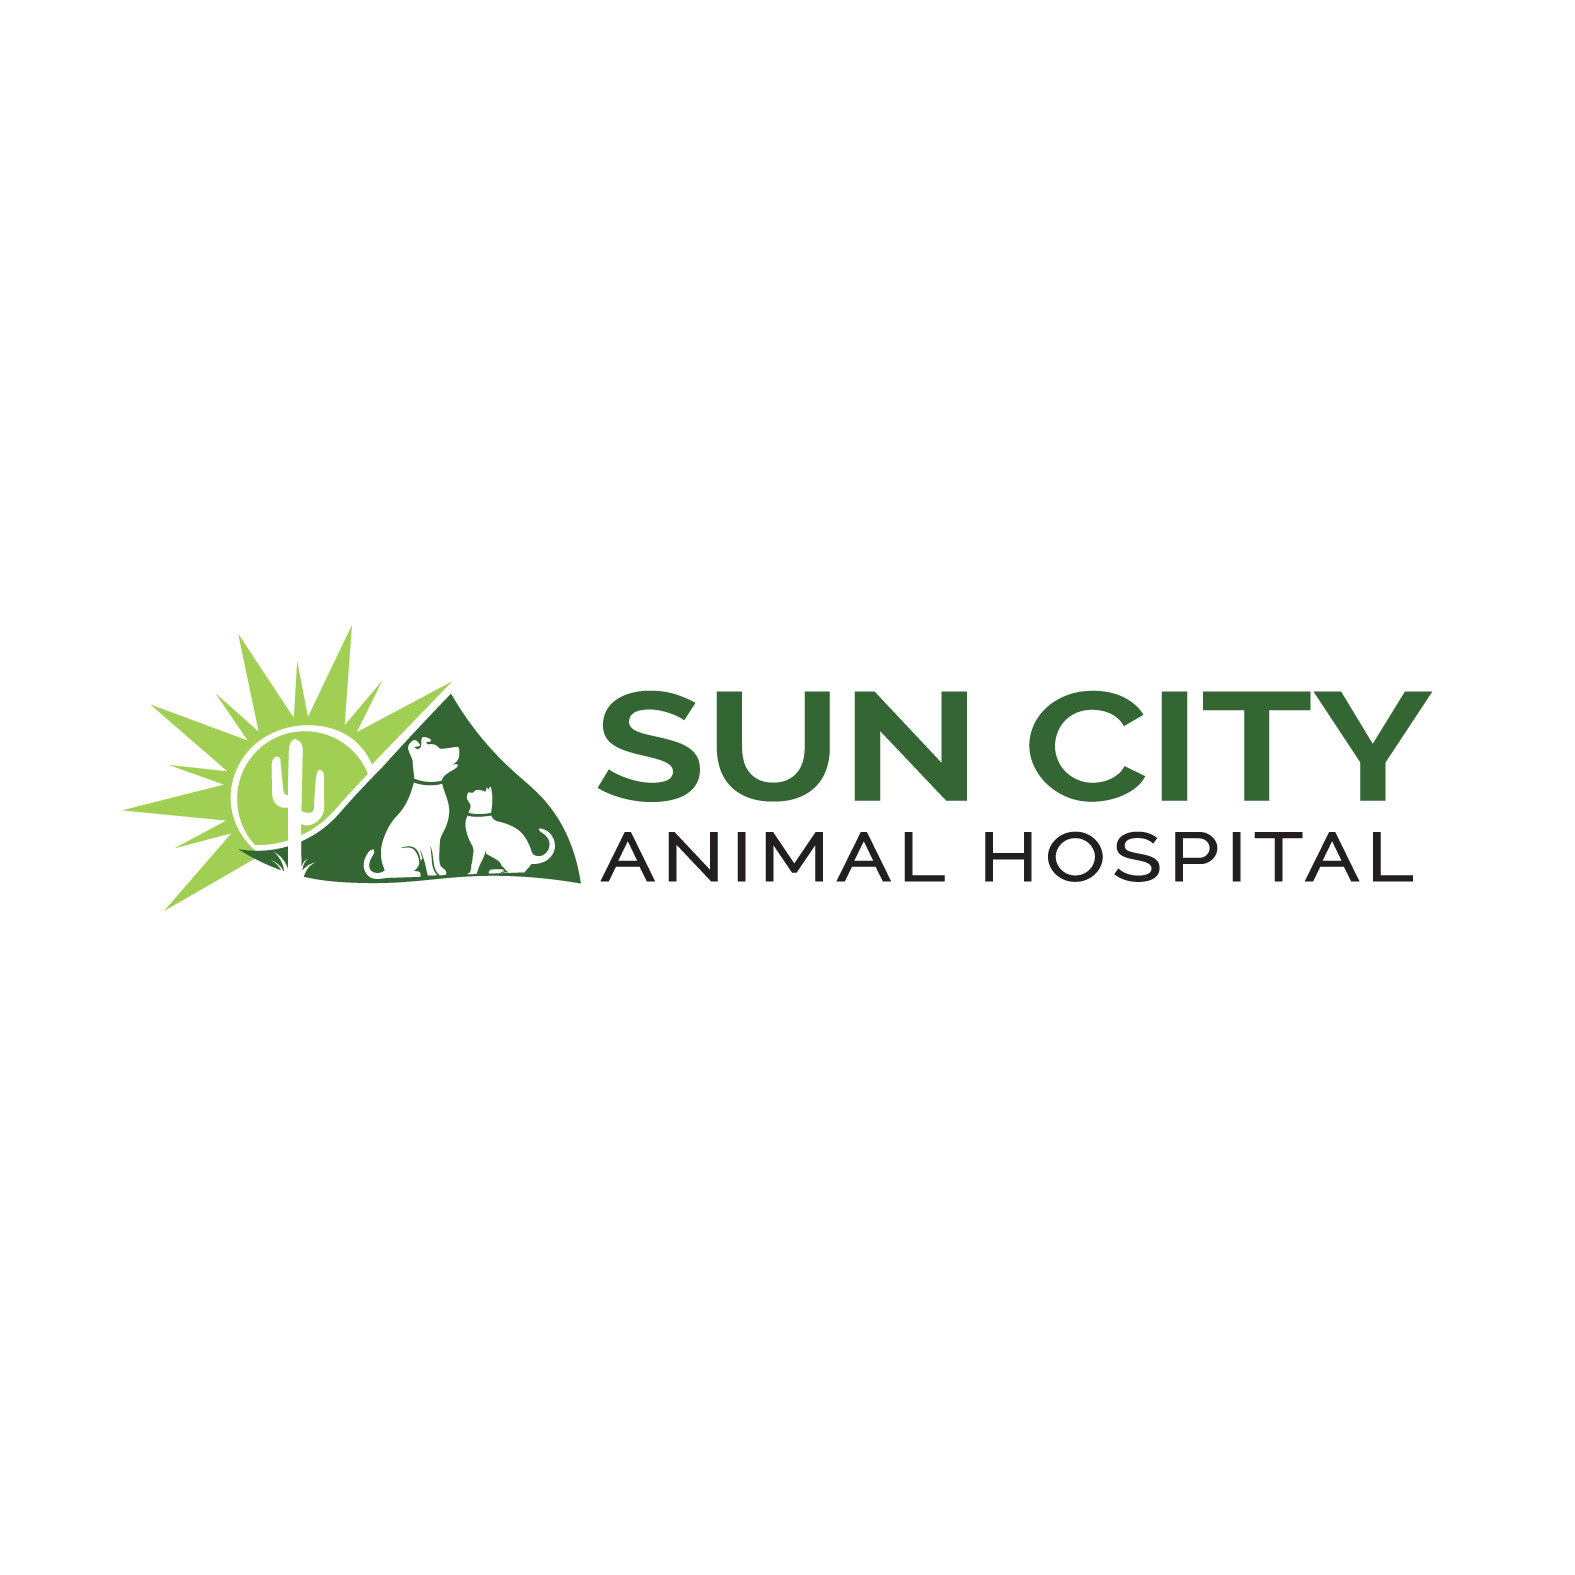 Sun City Animal Hospital - Sun City, AZ 85351 - (623)974-3691 | ShowMeLocal.com